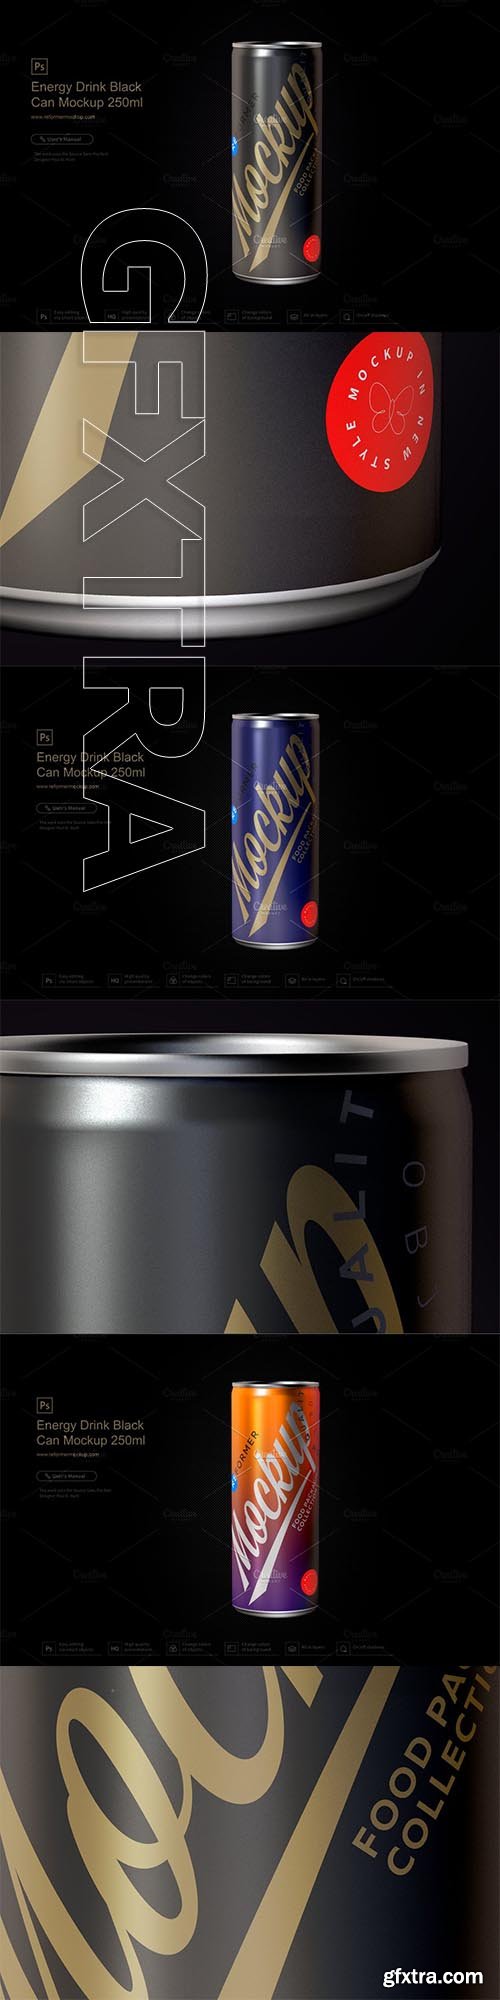 CreativeMarket - Energy Drink Black Can Mockup 250ml 3542297